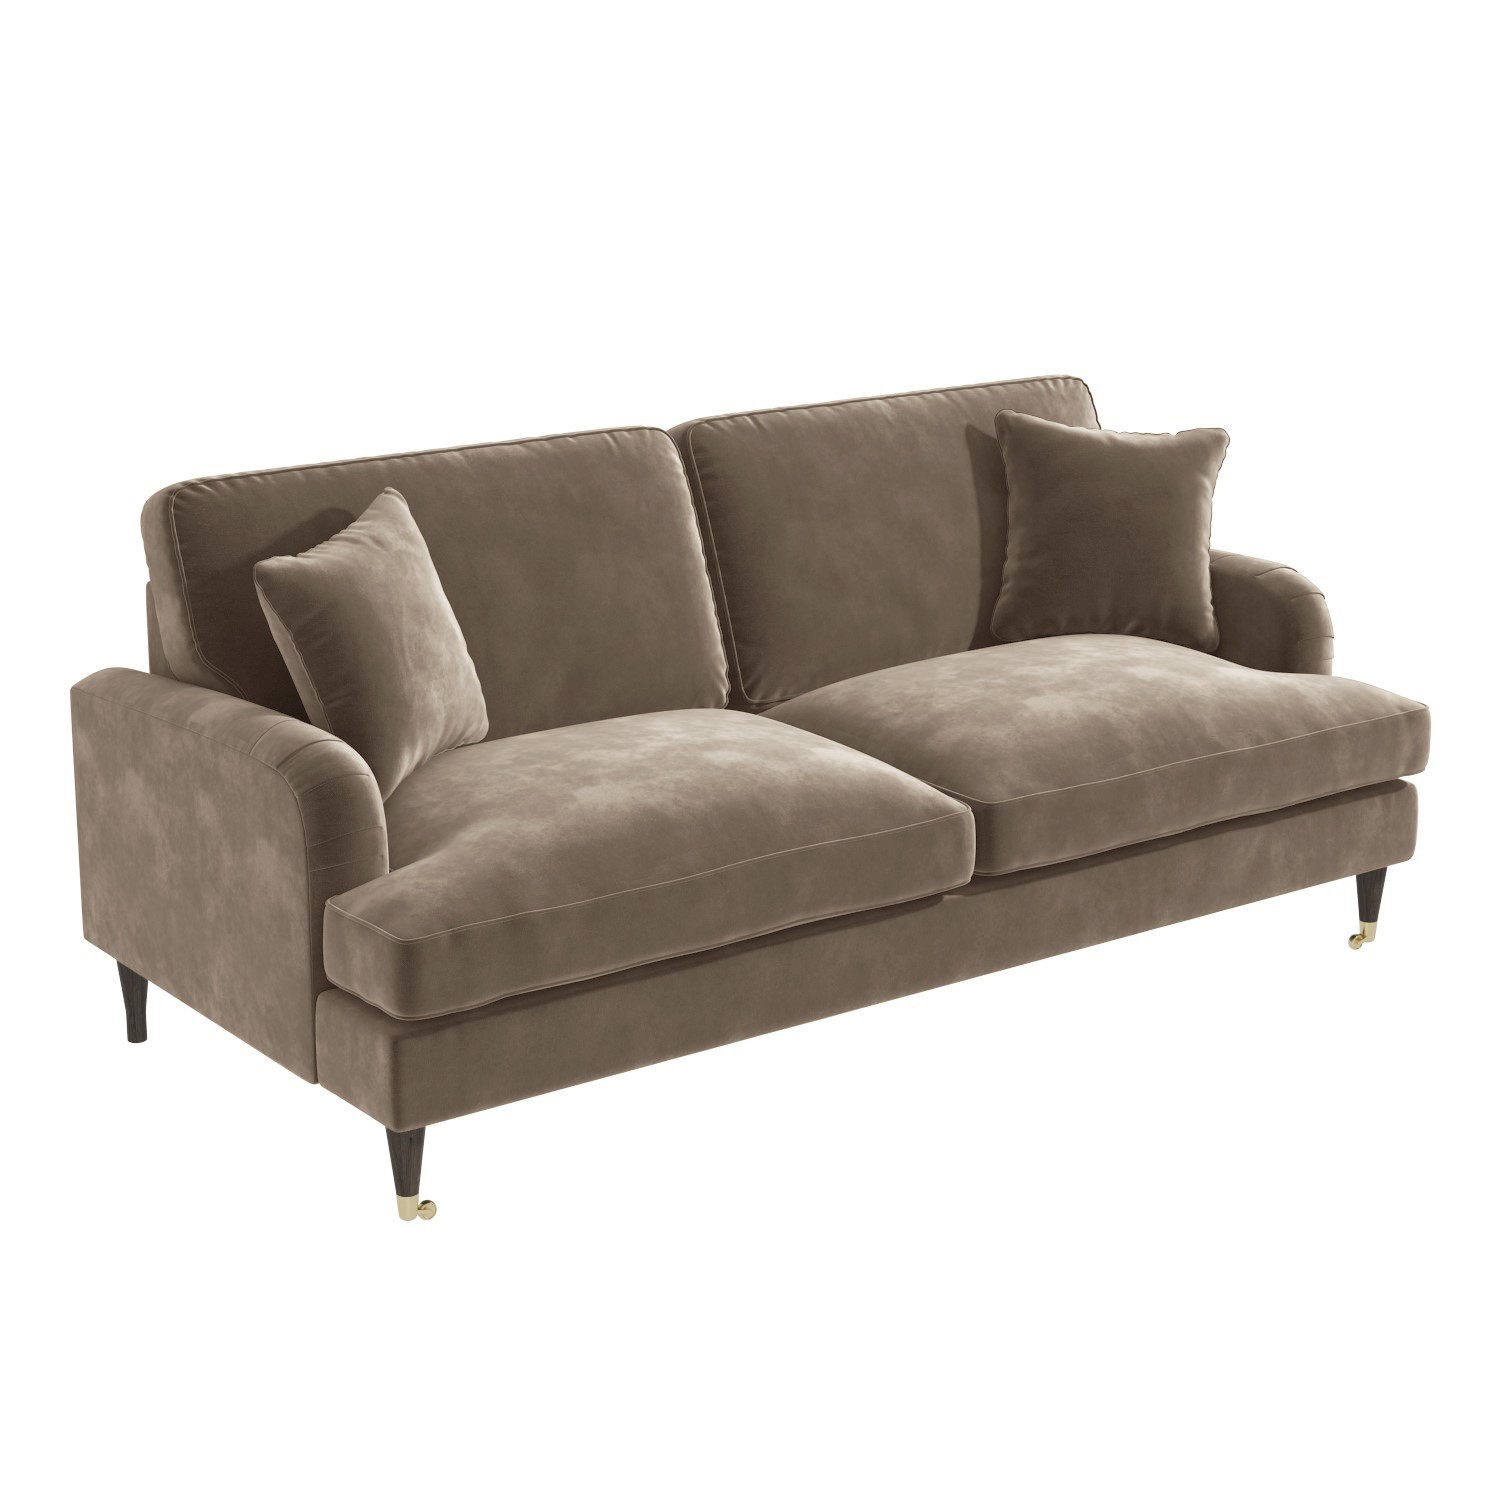 Photo of Beige velvet sofa - seats 3 - payton